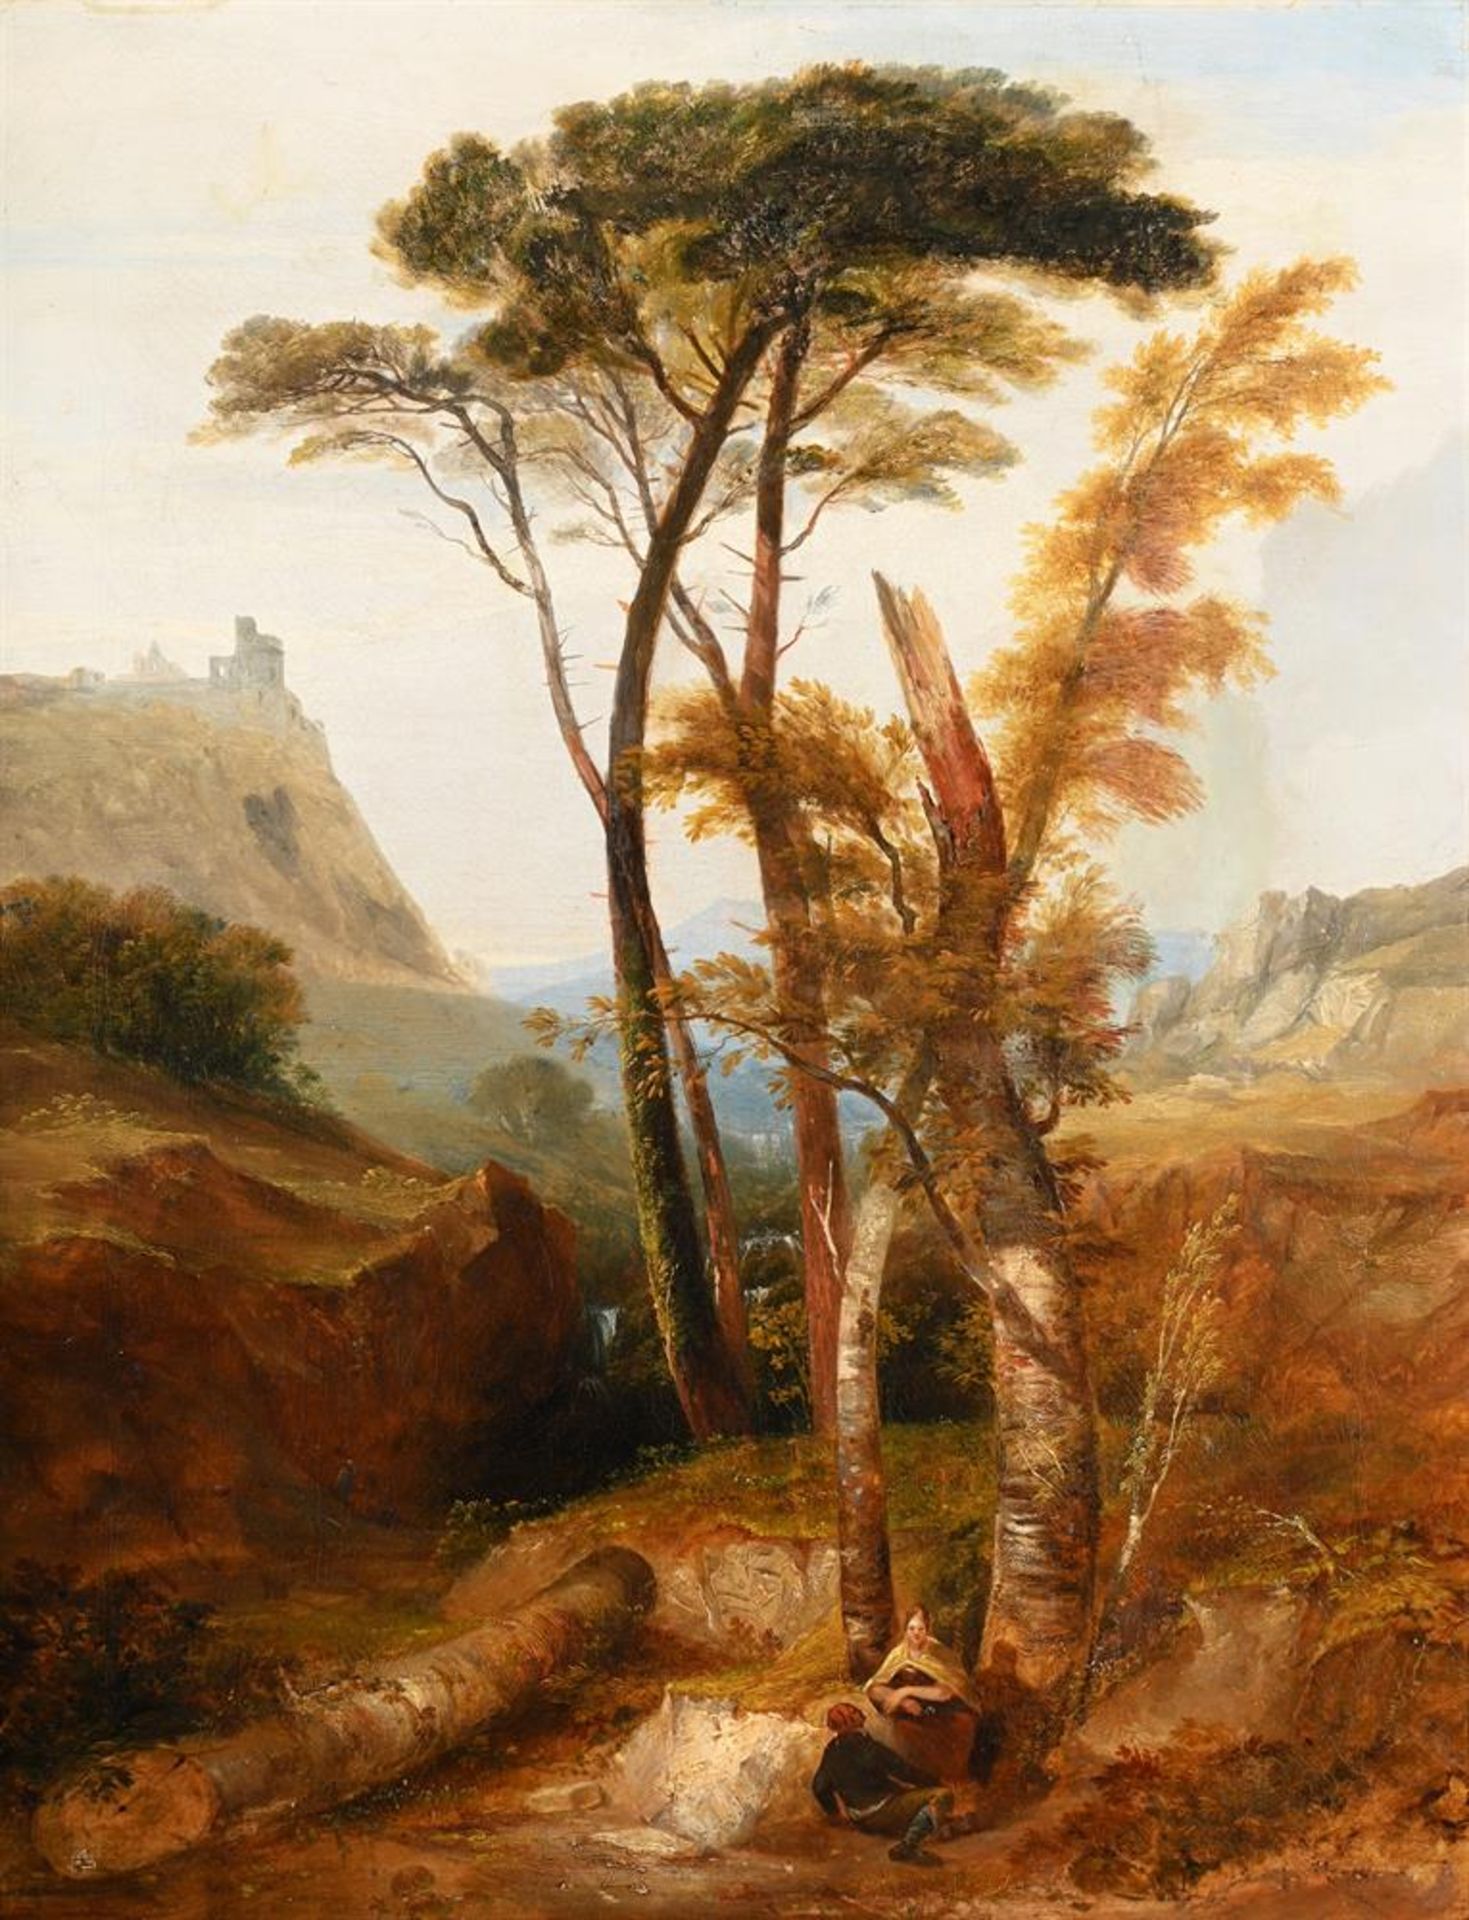 FOLLOWER OF JAN HACKAERT, TWO TRAVELLERS RESTING BENEATH A TREE